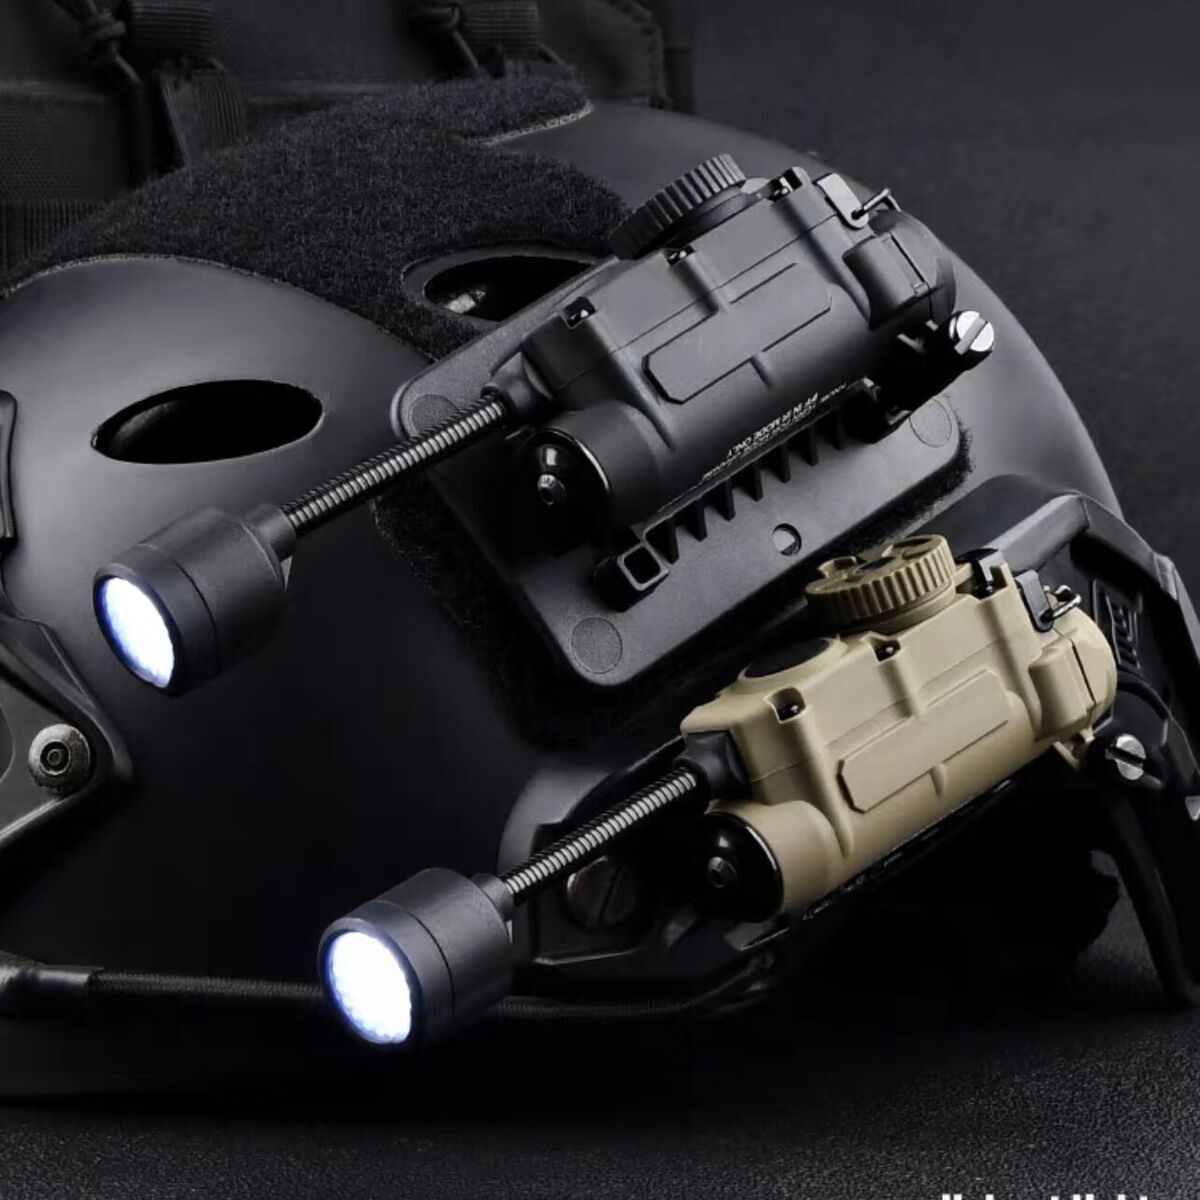 WADSN Luz de capacete Sidewinder Stalk